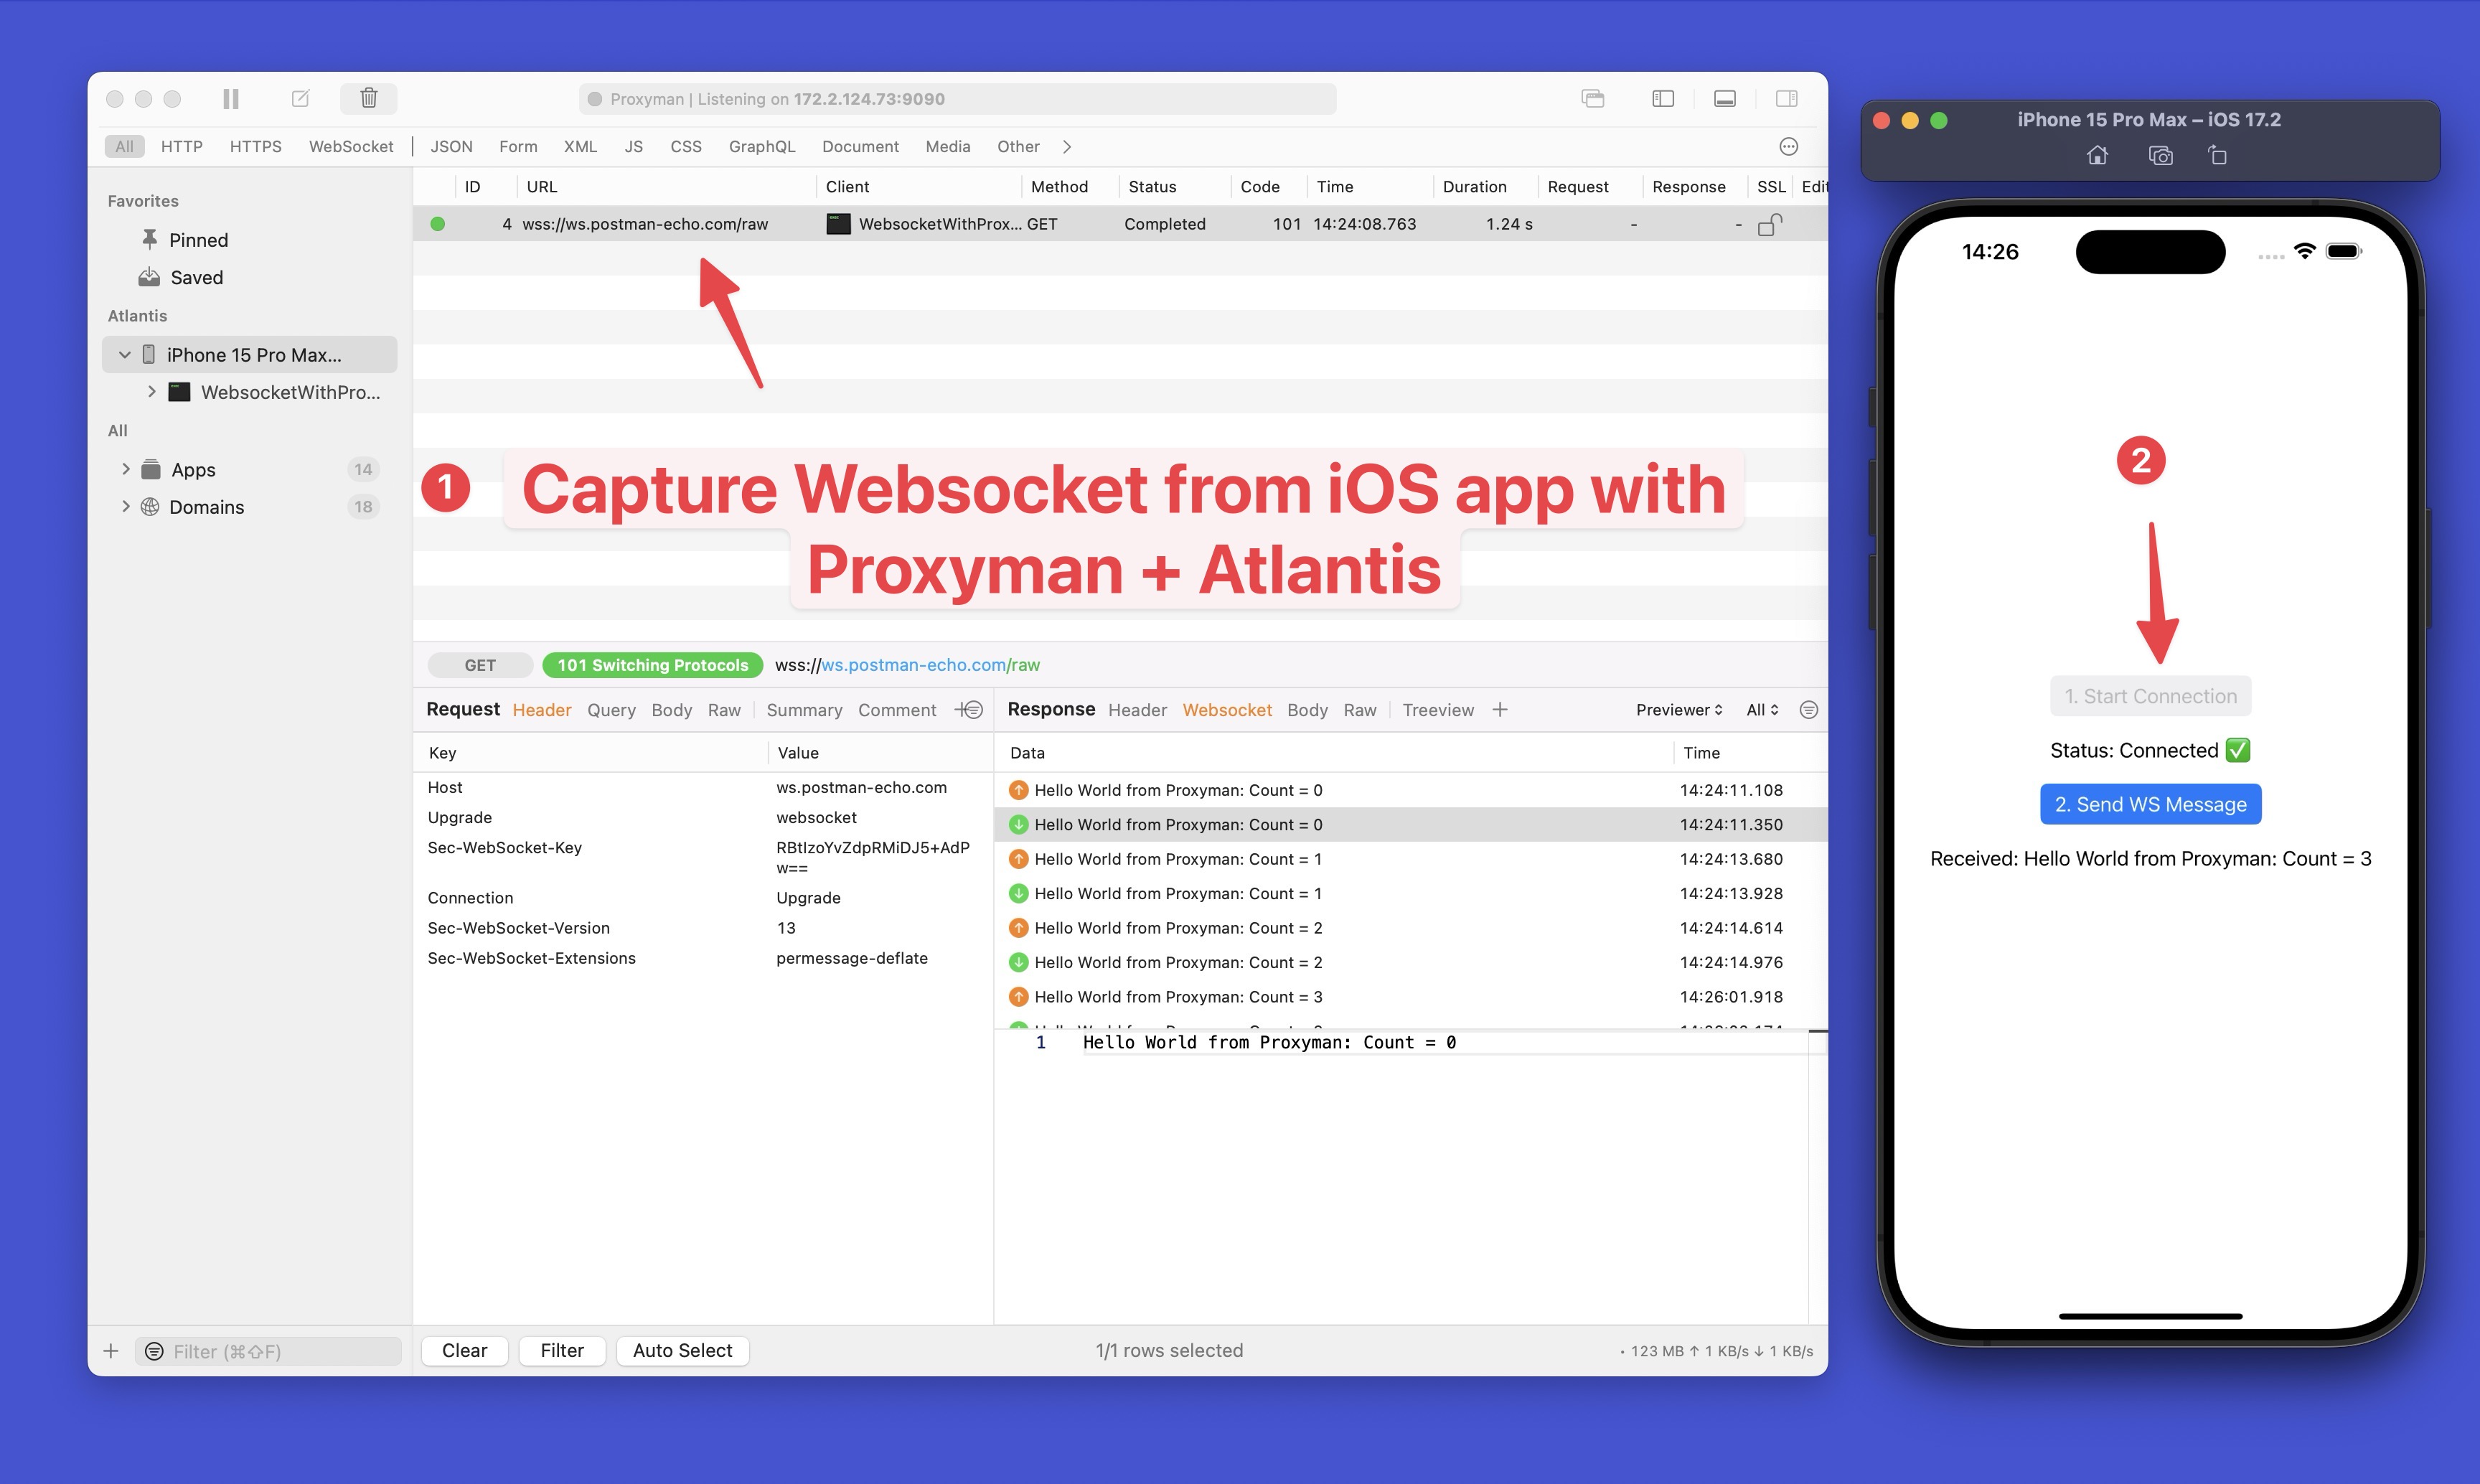 Proxyman capture websocket from iOS